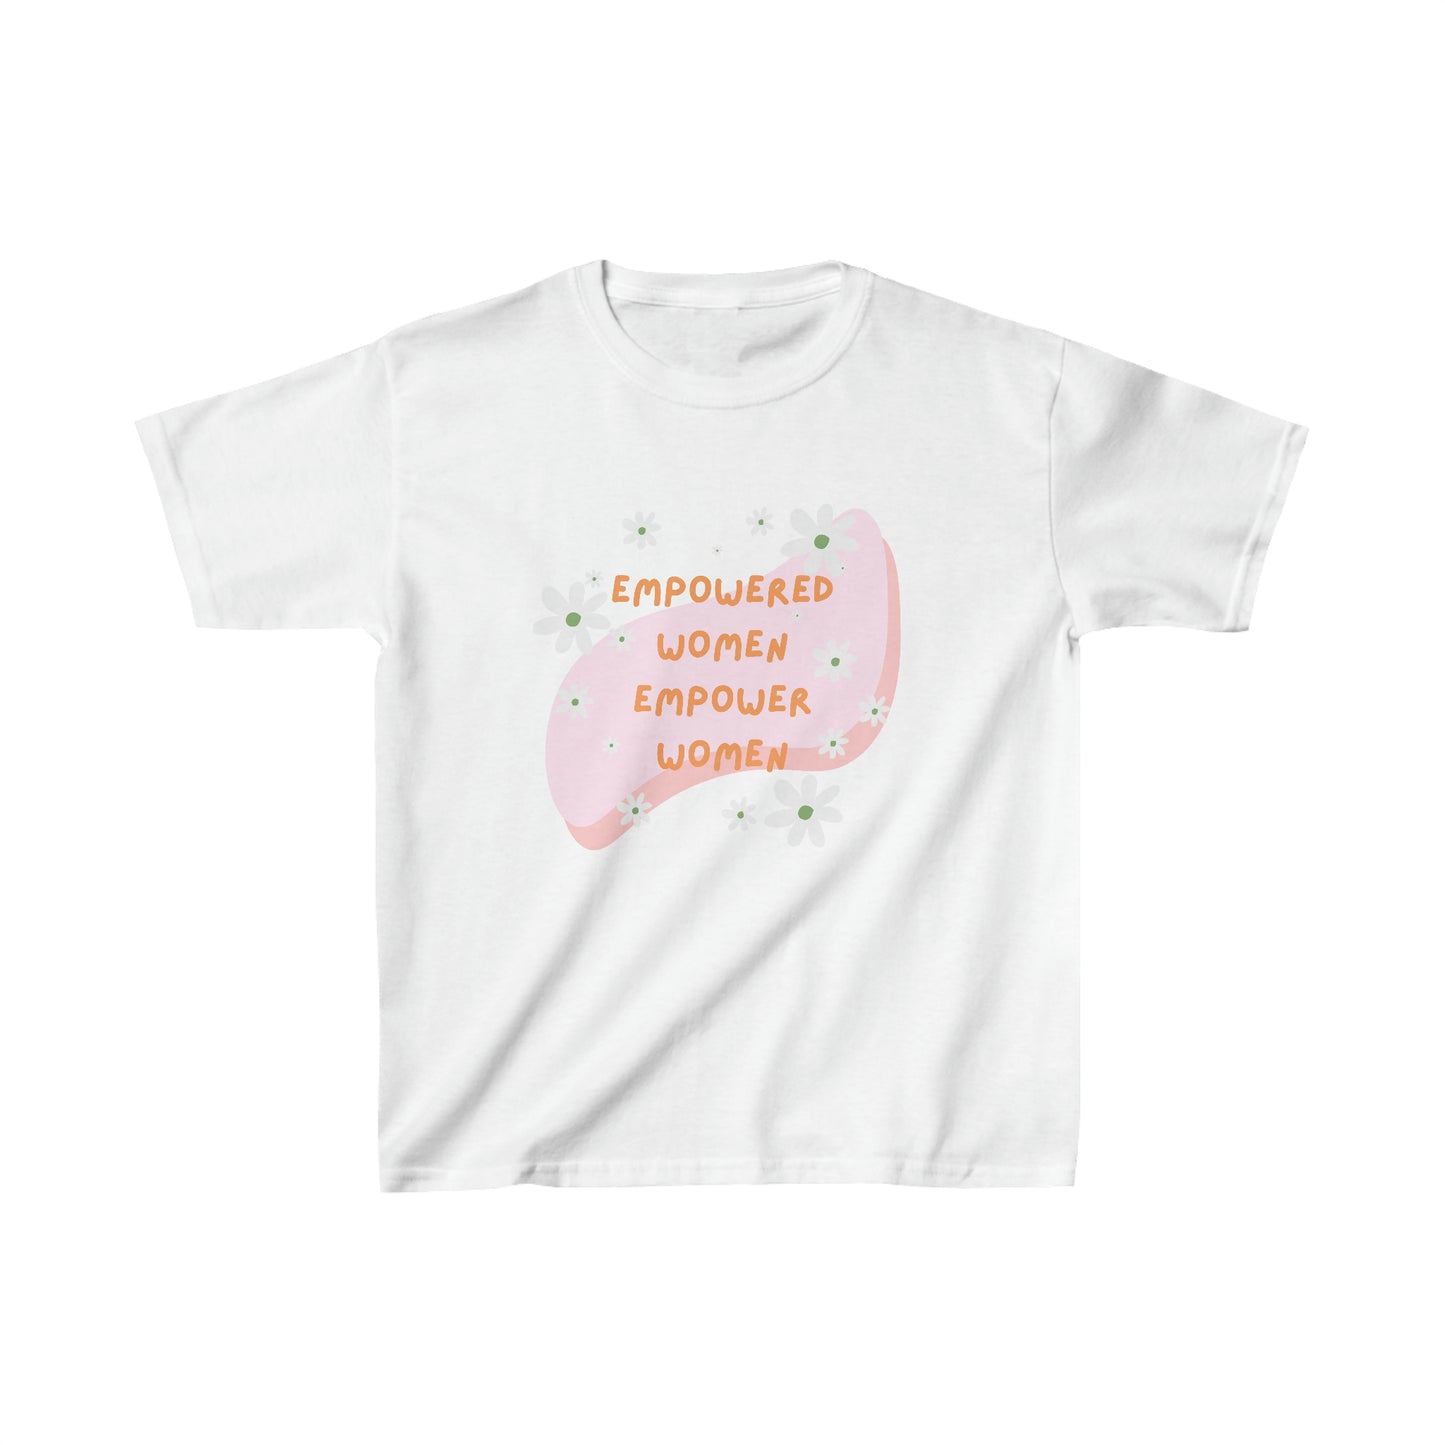 EMPOWERED WOMEN t-shirt - child